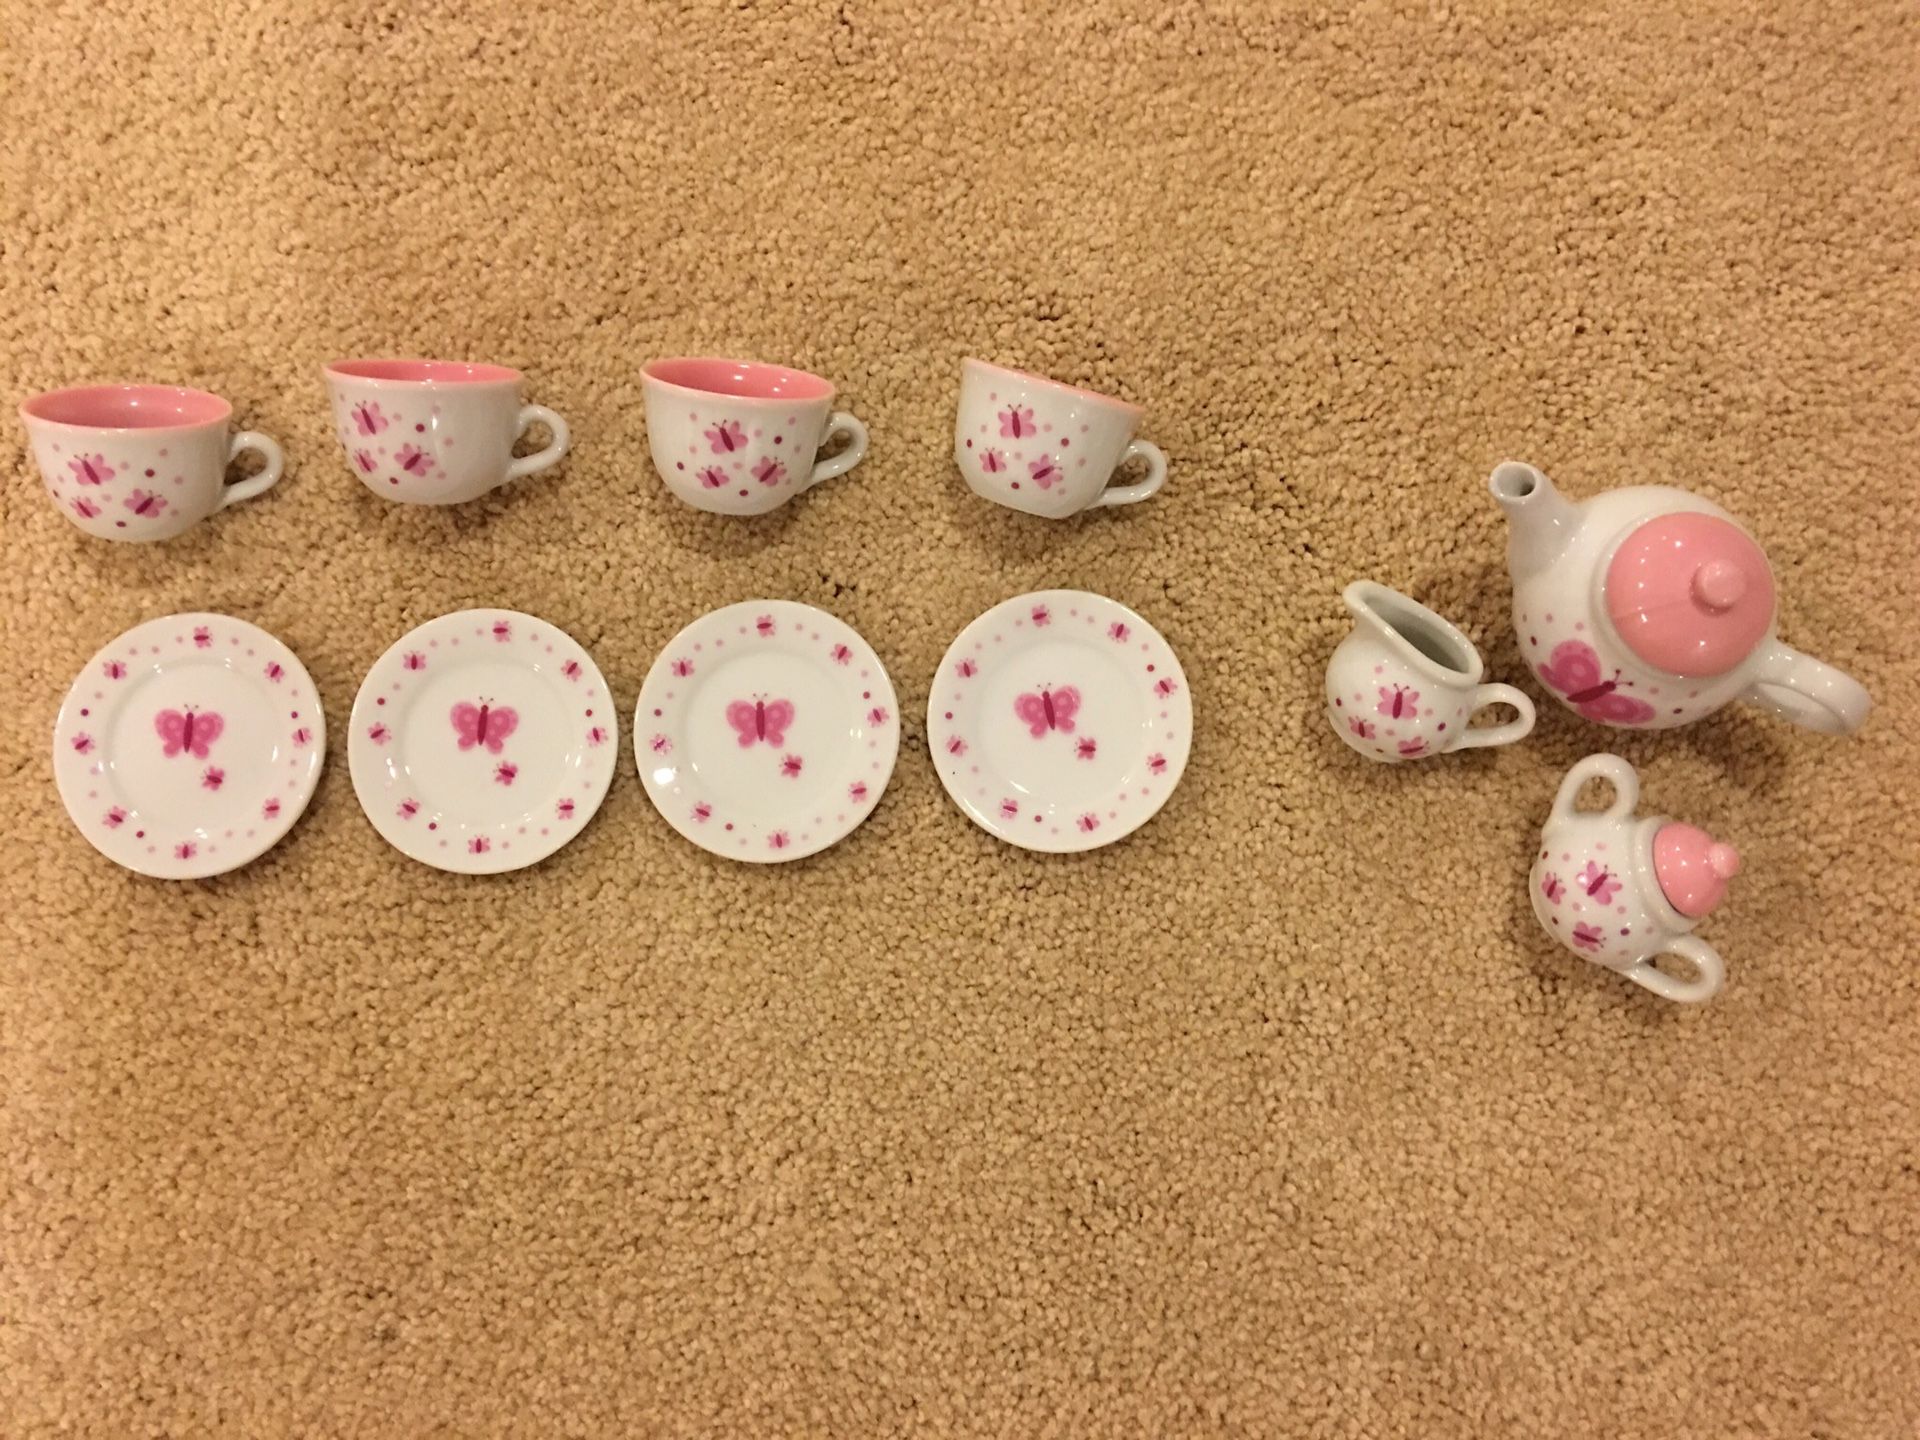 Two sets of children’s tea sets